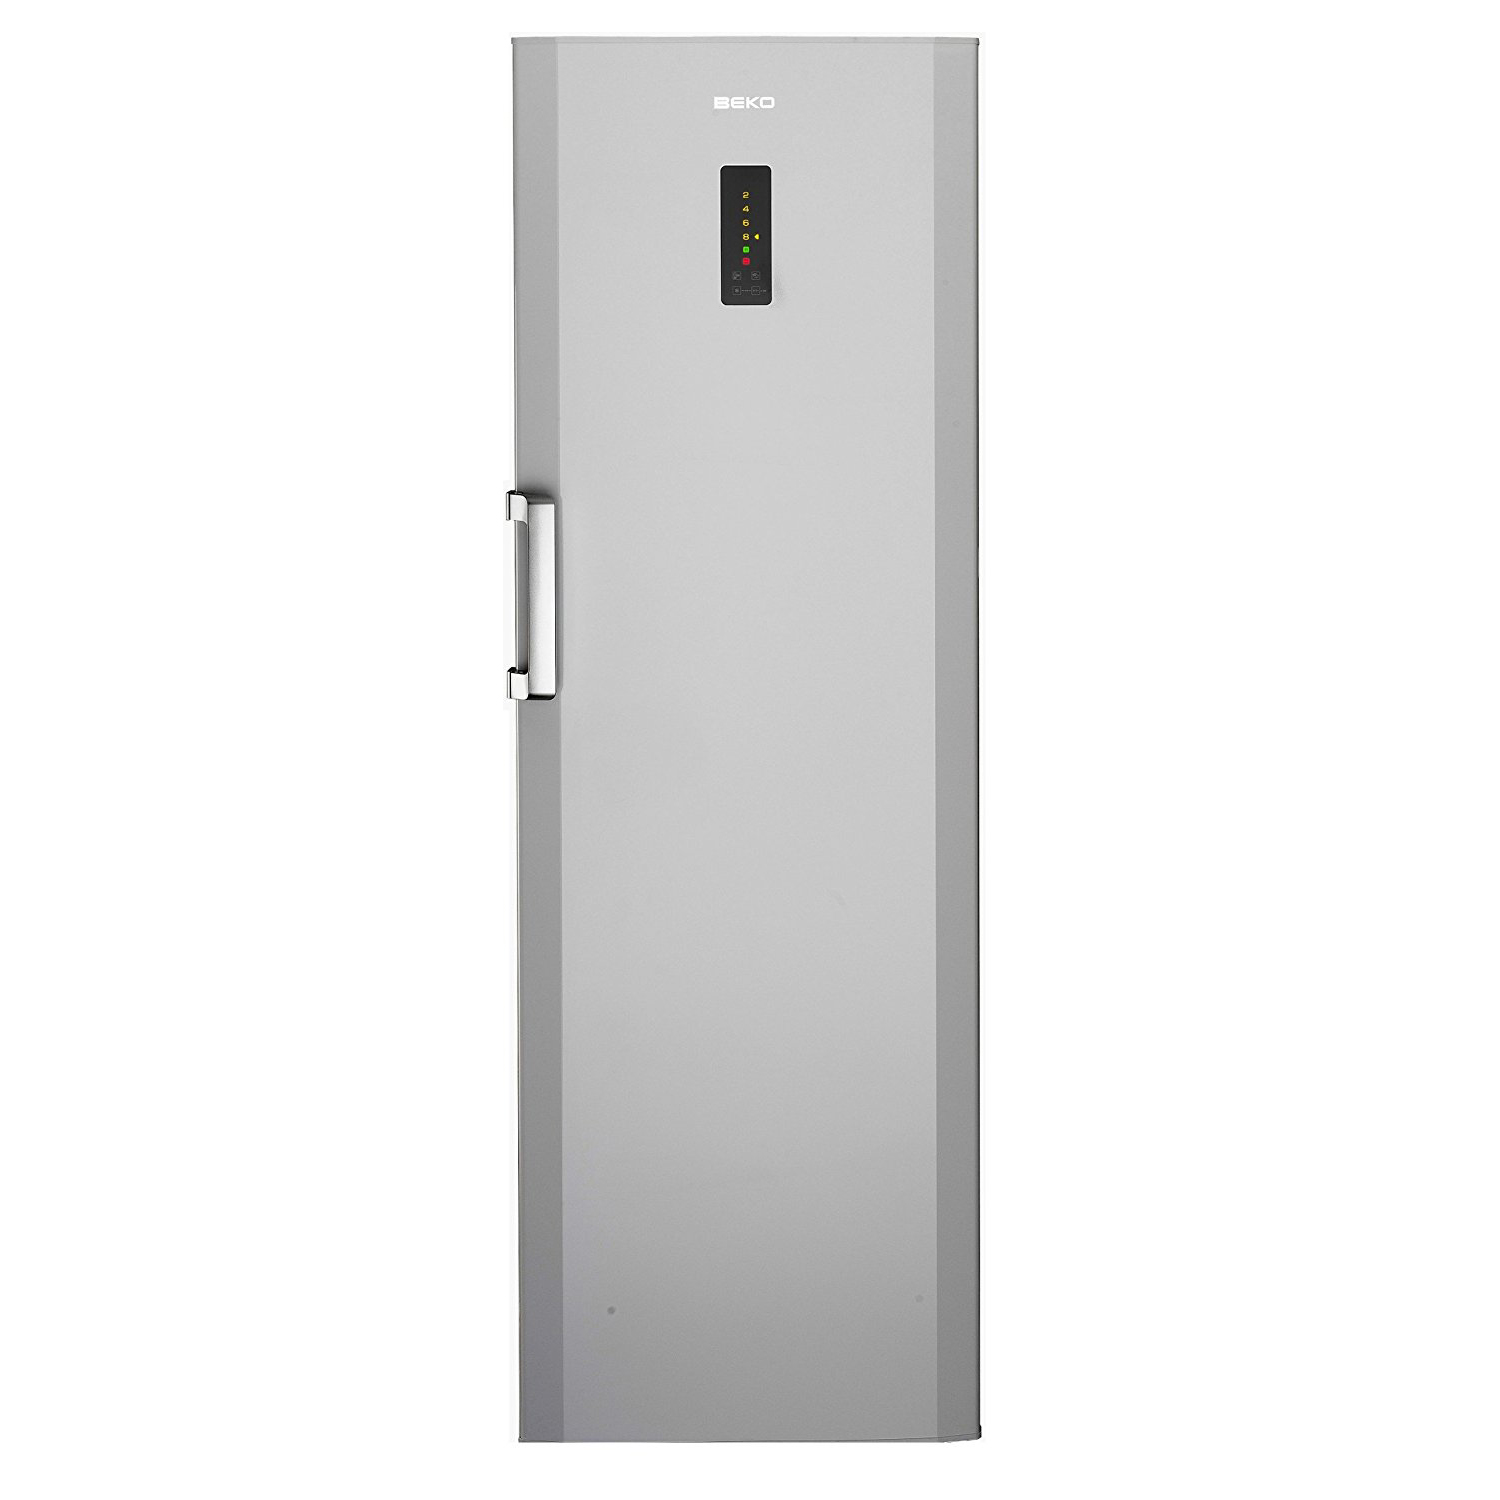 Beko Free Standing Refrigerator, 350L Net Capacity, Inox, SN140220X 